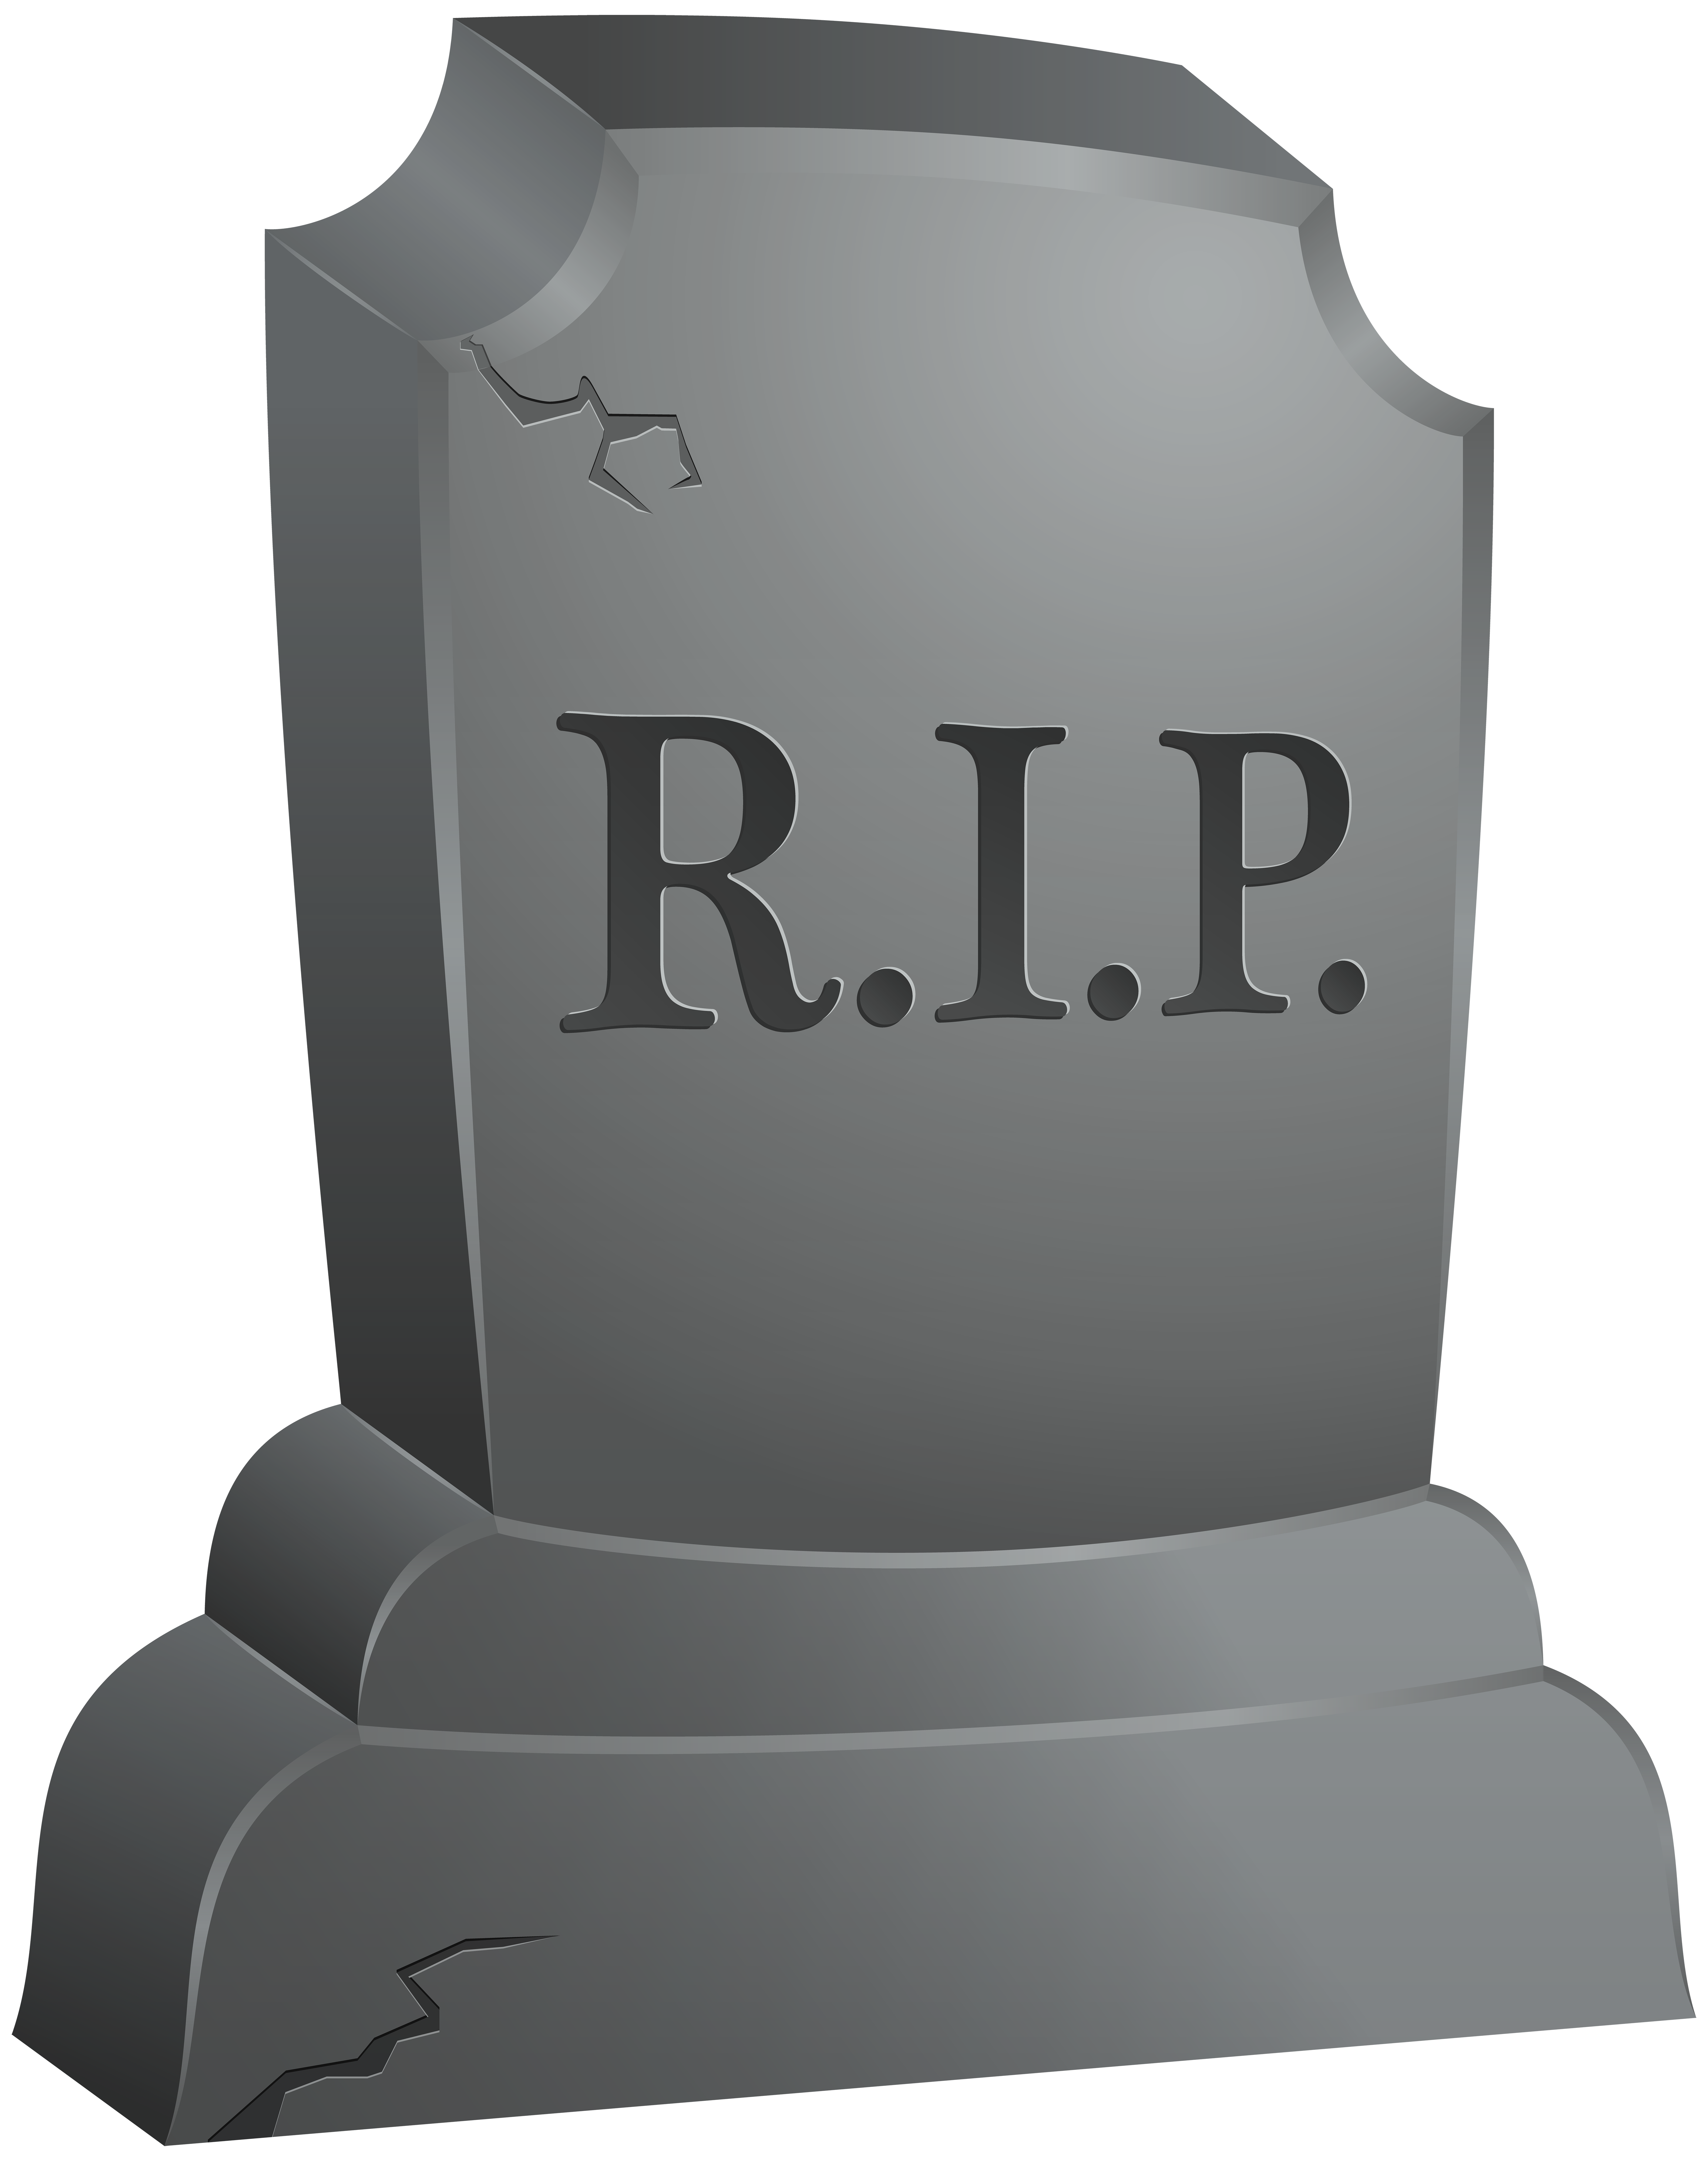 gravestone clipart rest in peace